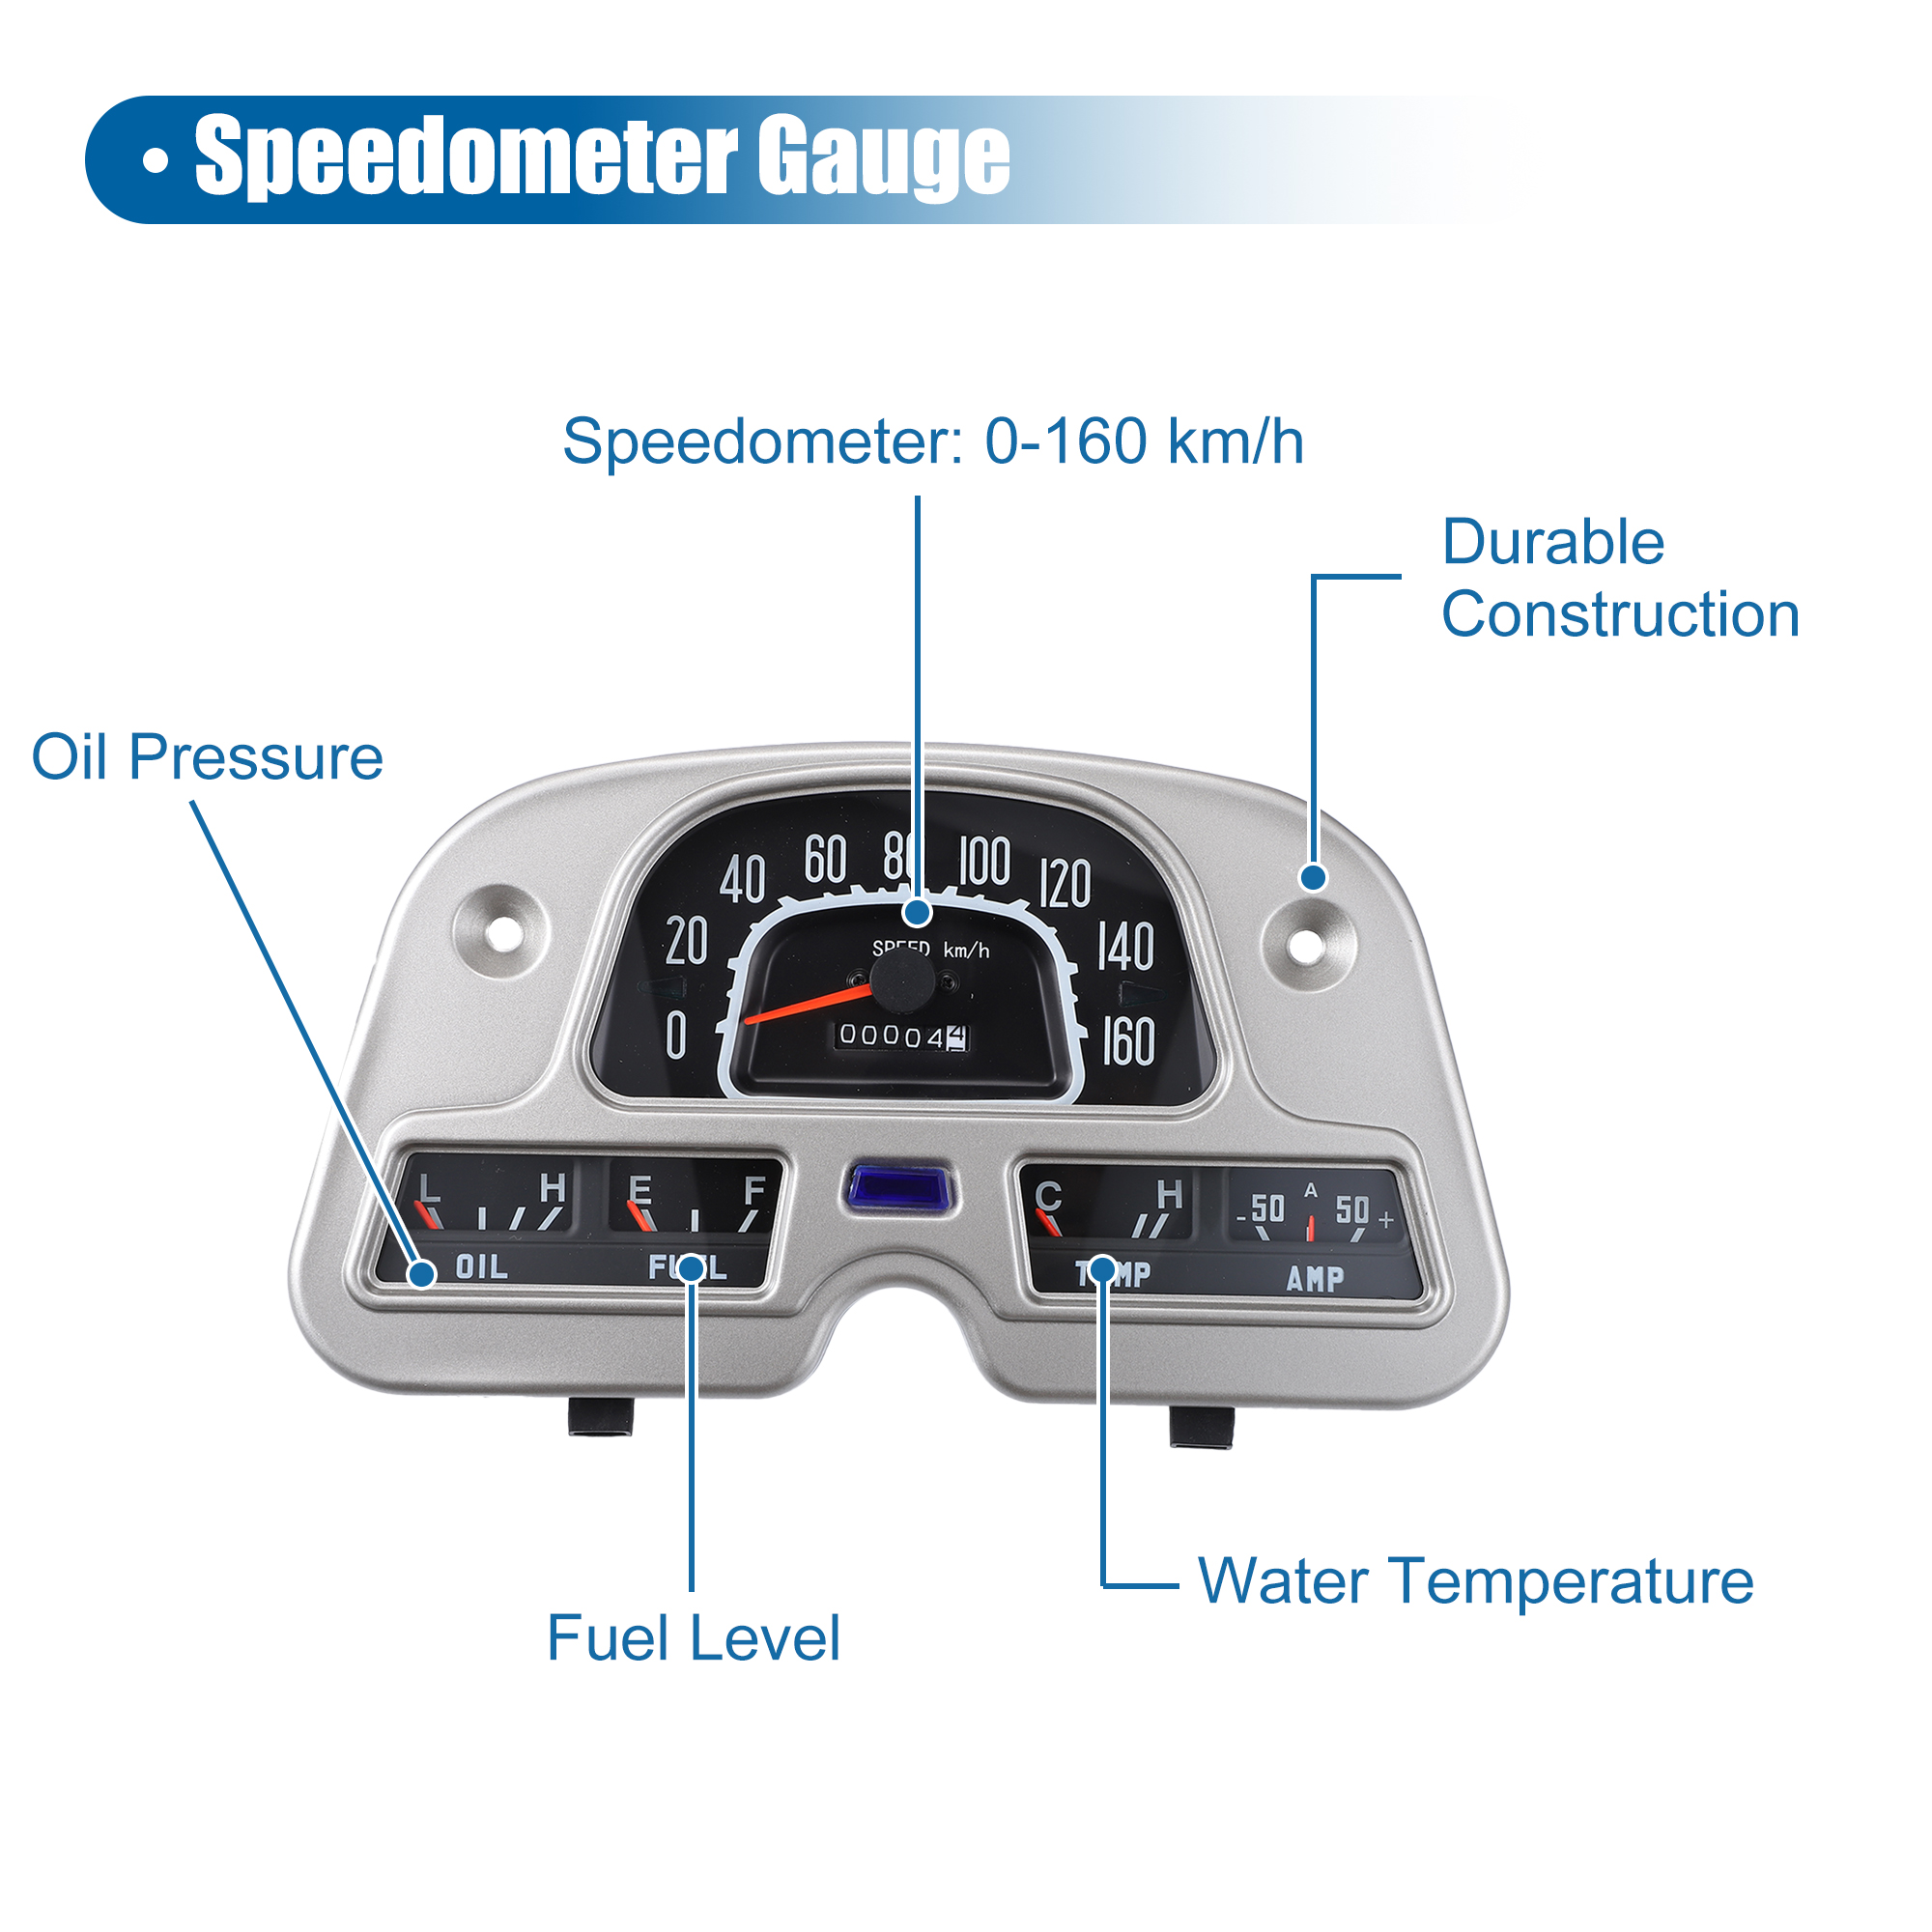 Unique Bargains Speedometer Gauge Cluster 83100-60180 for Toyota Land Cruiser FJ40 FJ45 BJ40